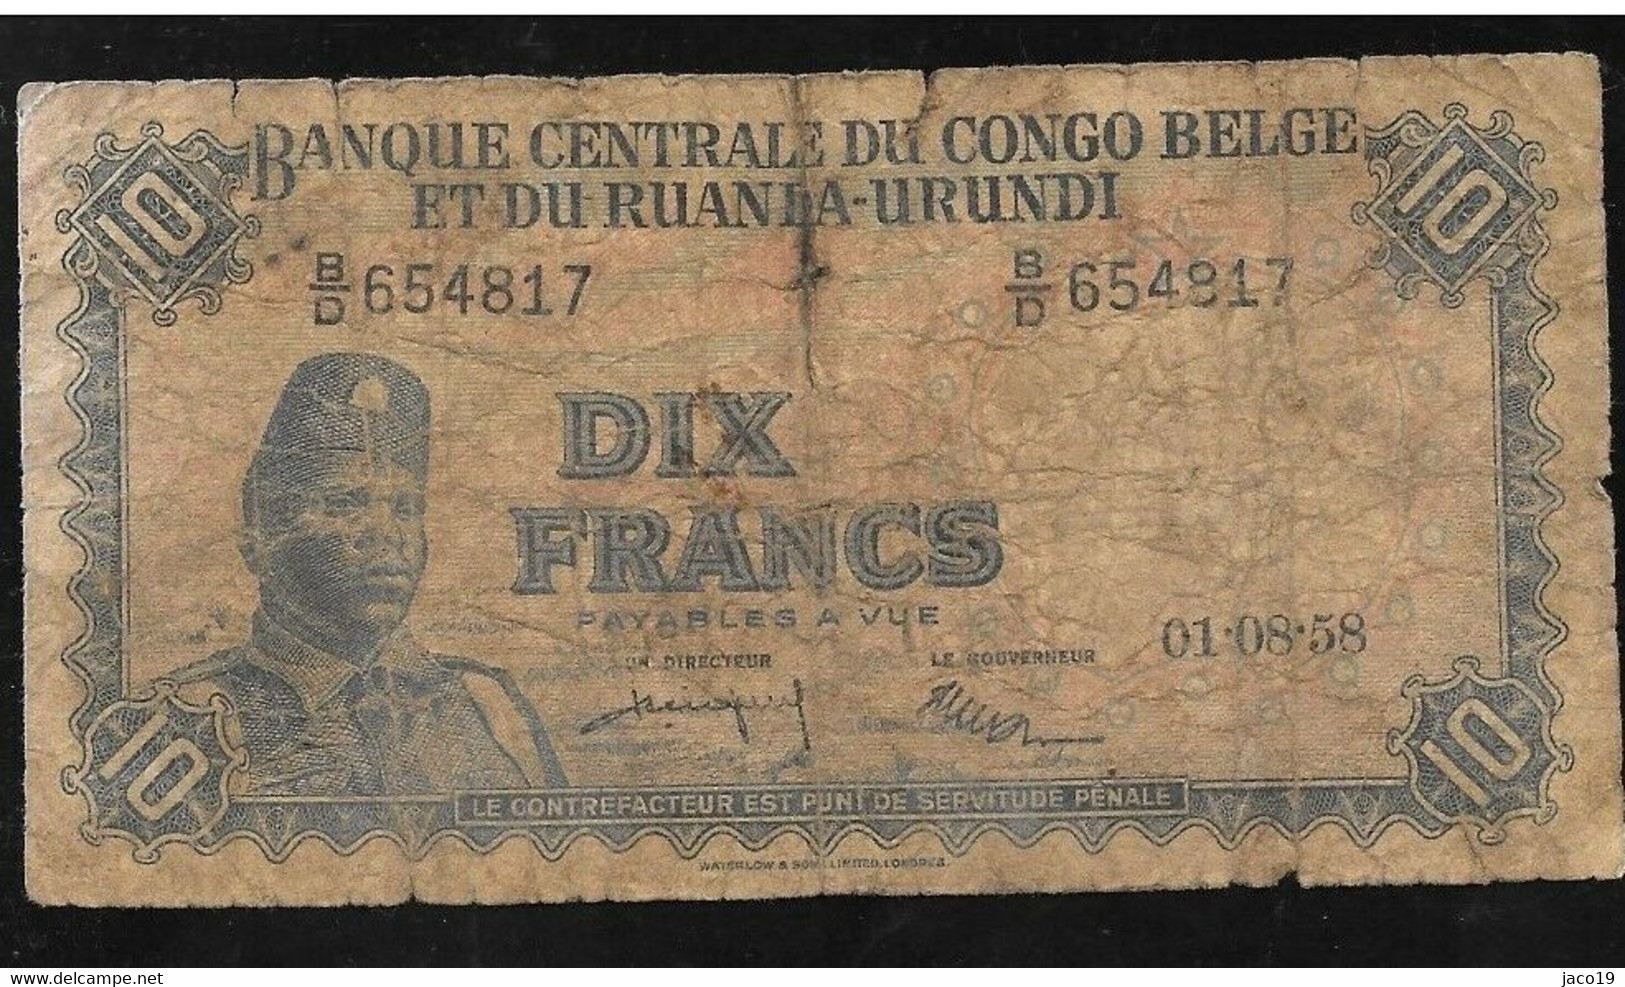 10 Francs -congo-belge Type "1955" 01-08-58 - Belgian Congo Bank